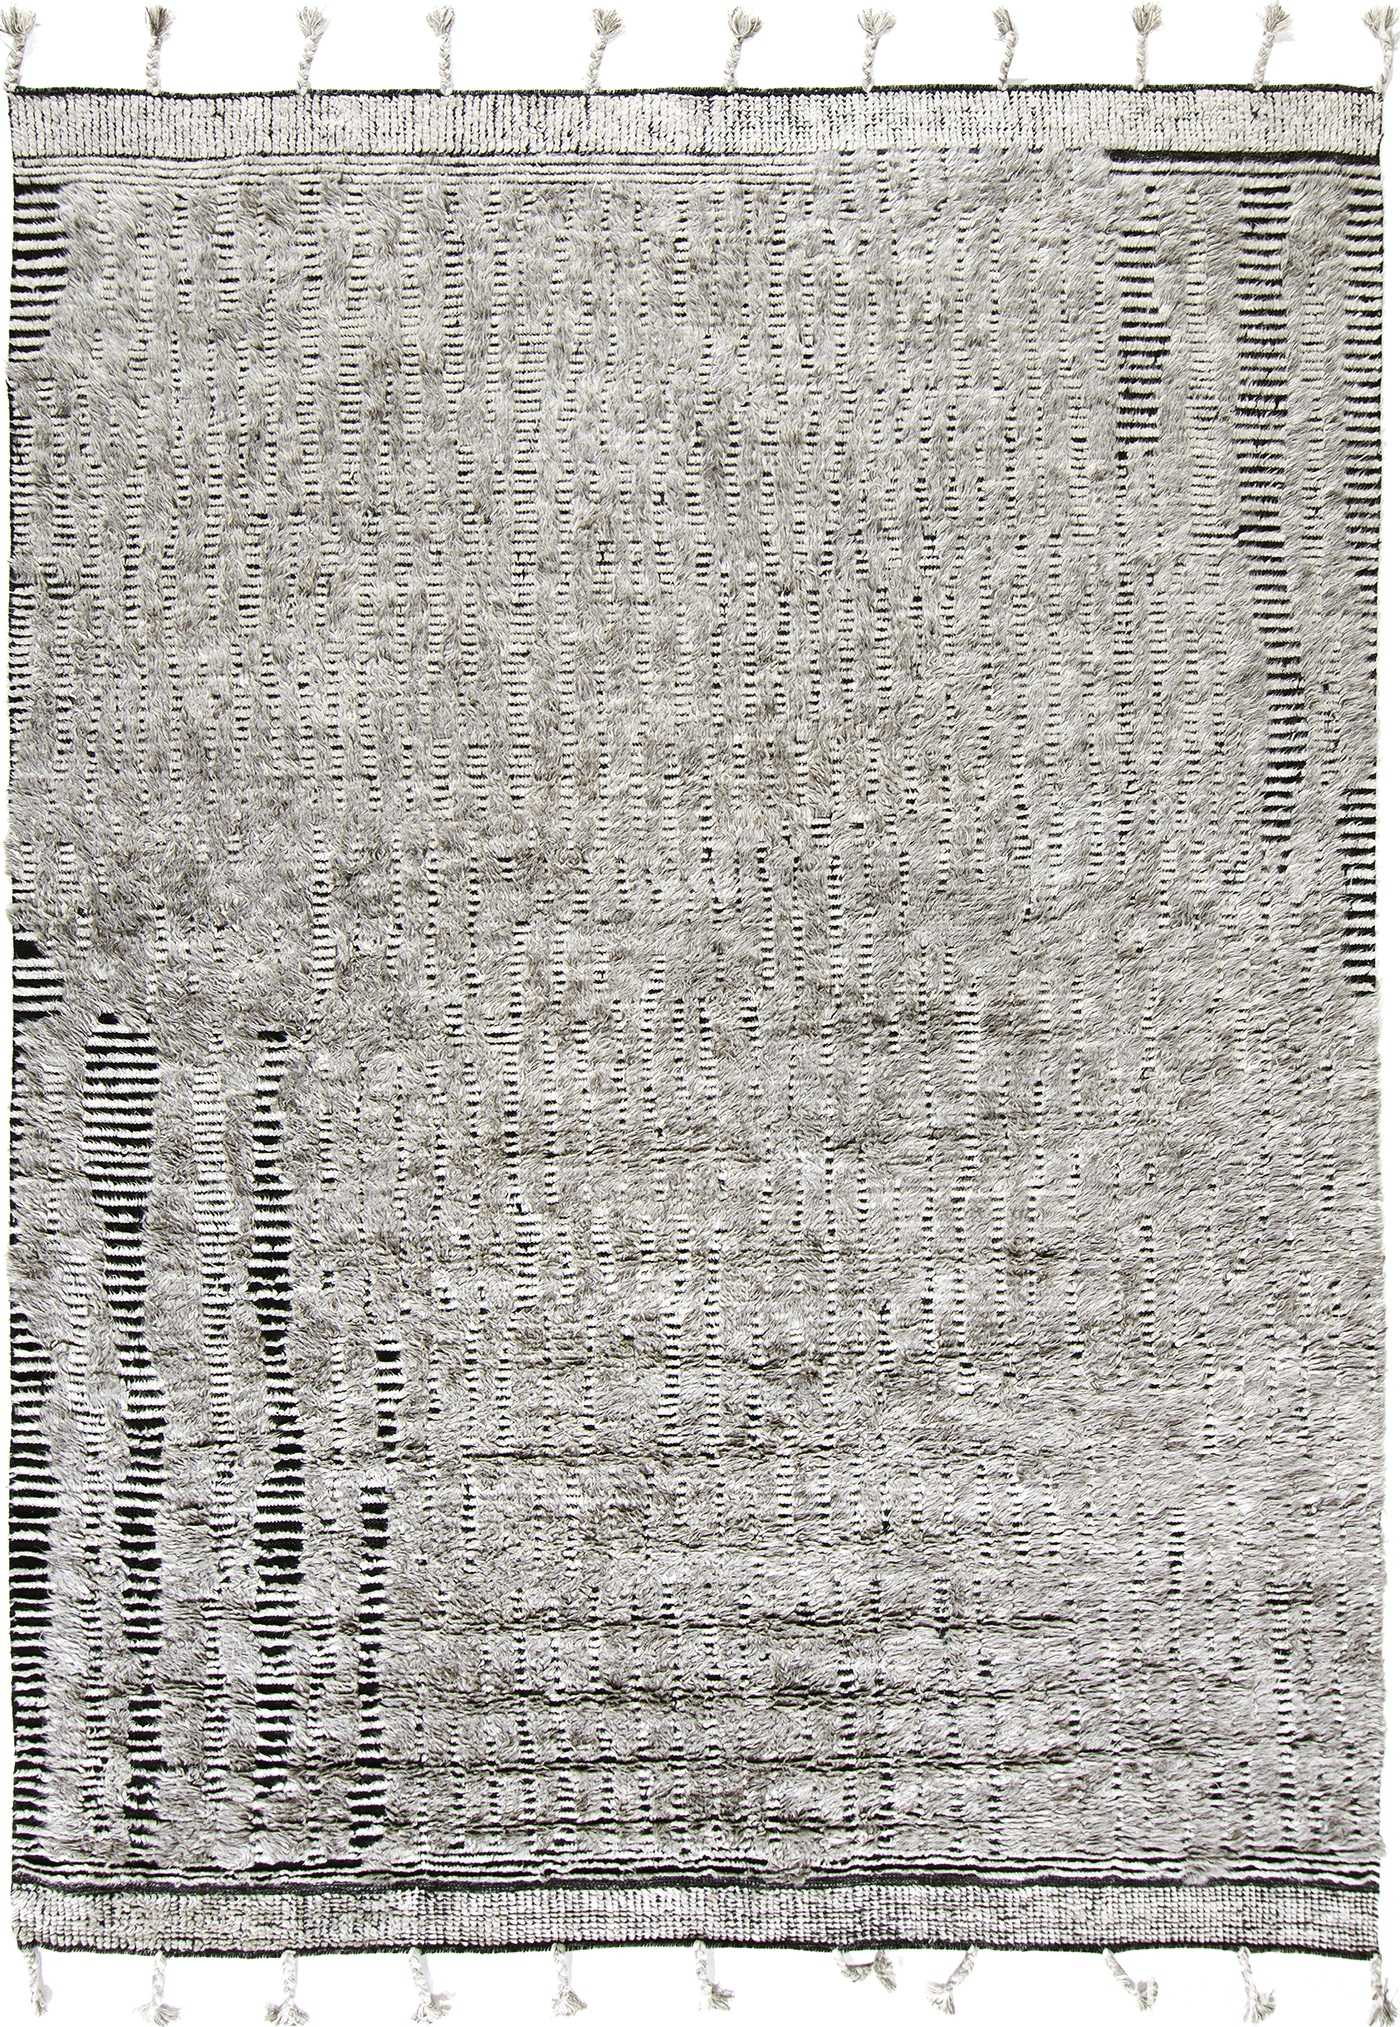 Textured Gray and Black Plush Modern Boho Chic Rug #142807906 by Nazmiyal Antique Rugs